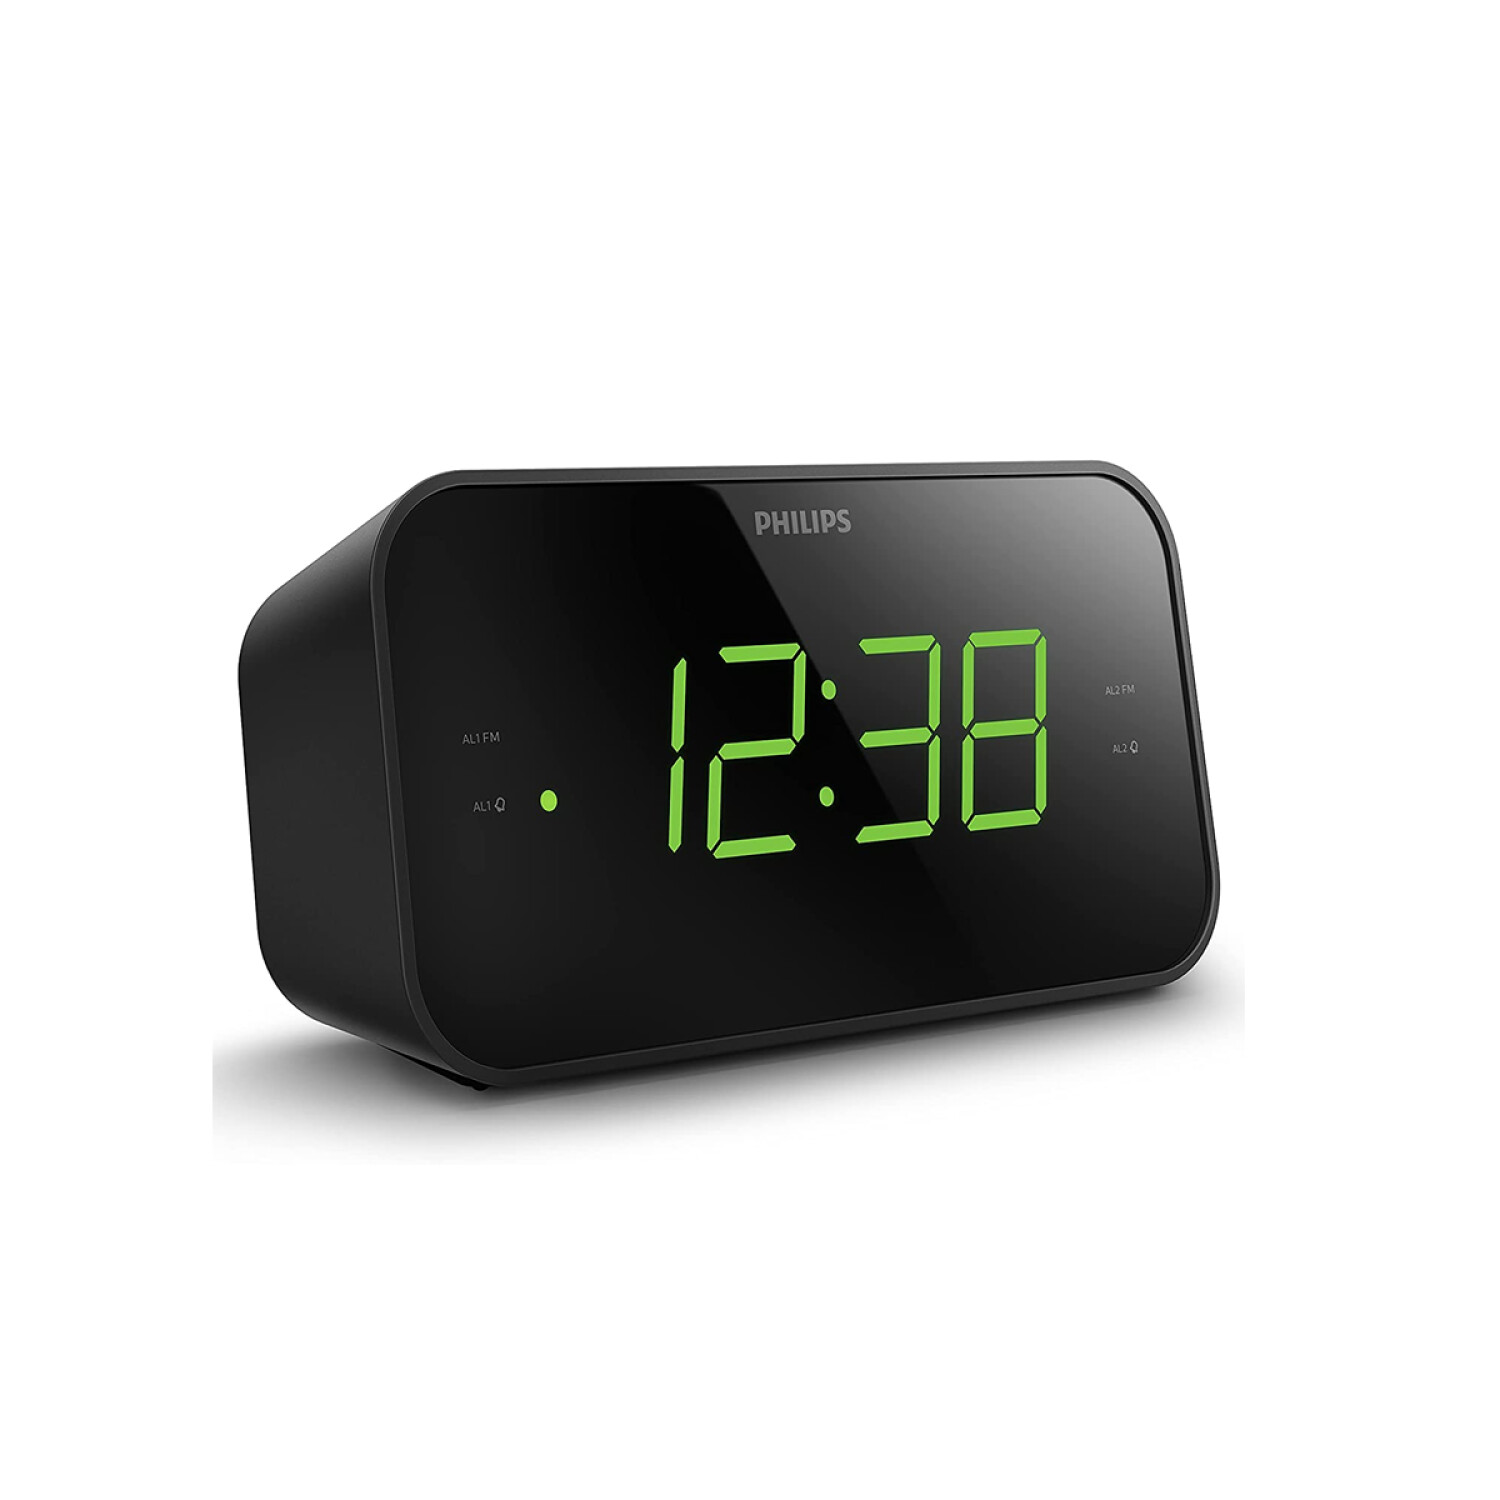 Radio Reloj Despertador Philips Doble Alarma — Game Stop